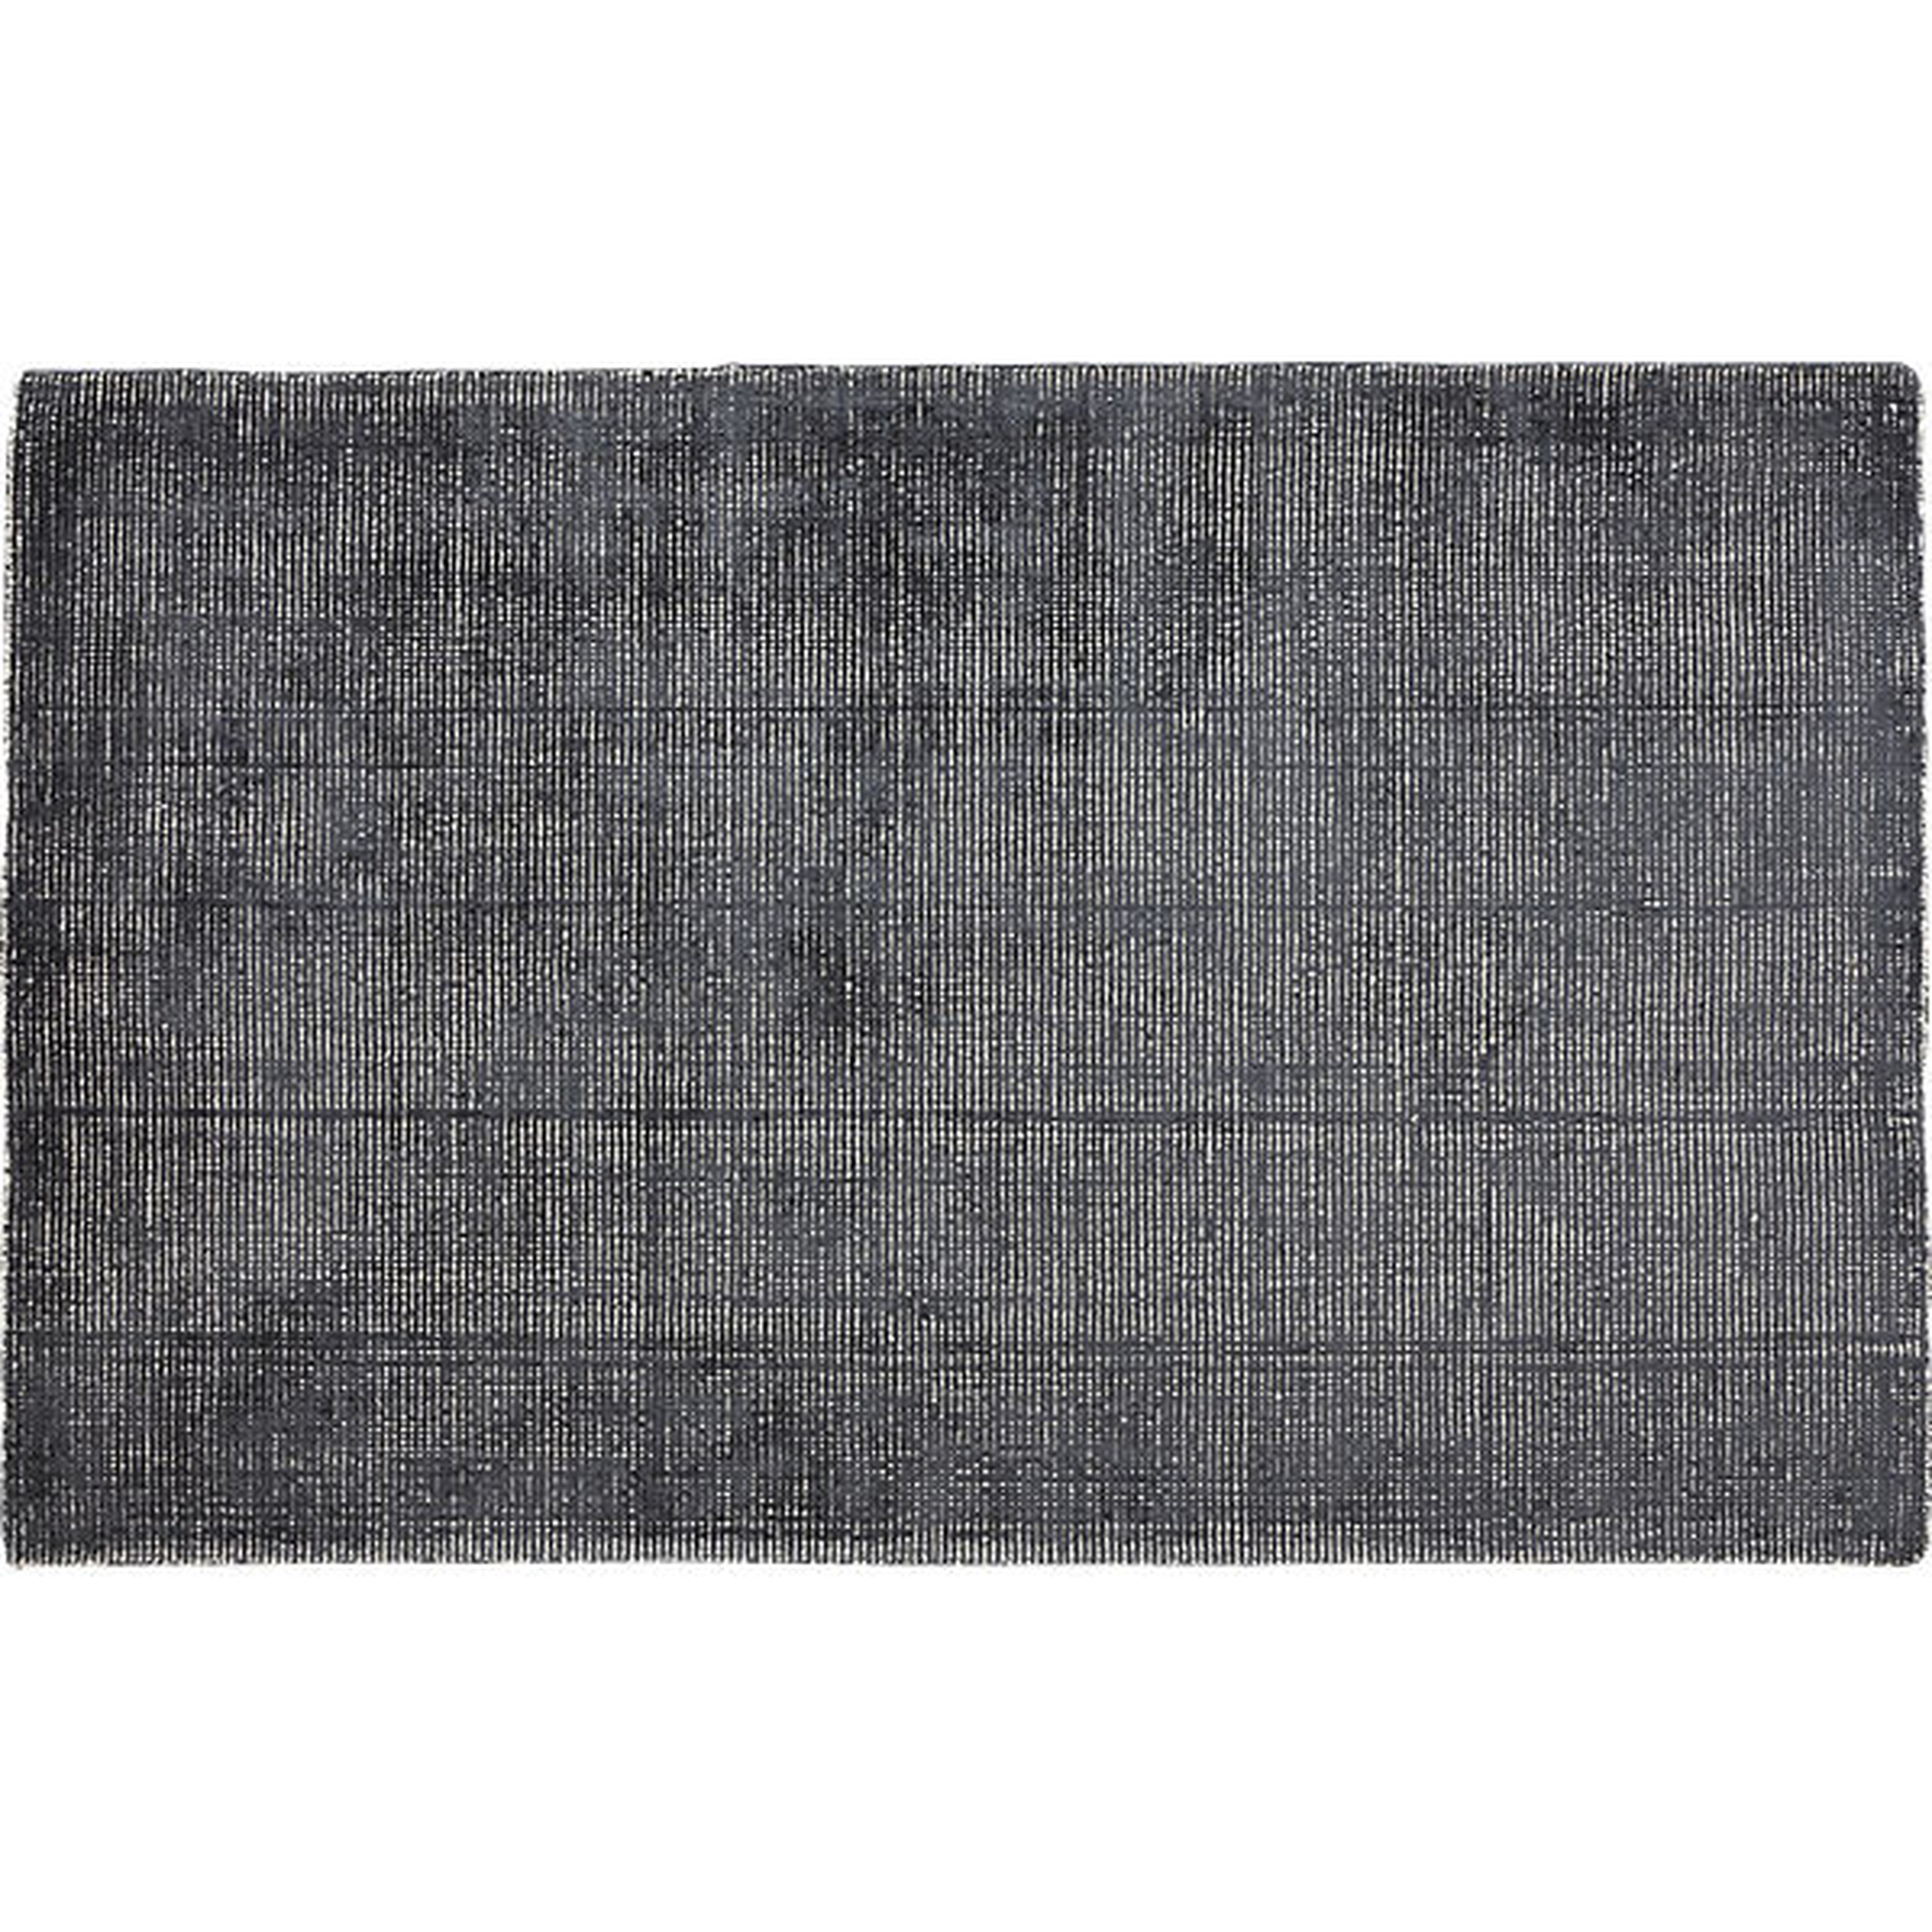 Scatter grey rug - 5X8' - CB2